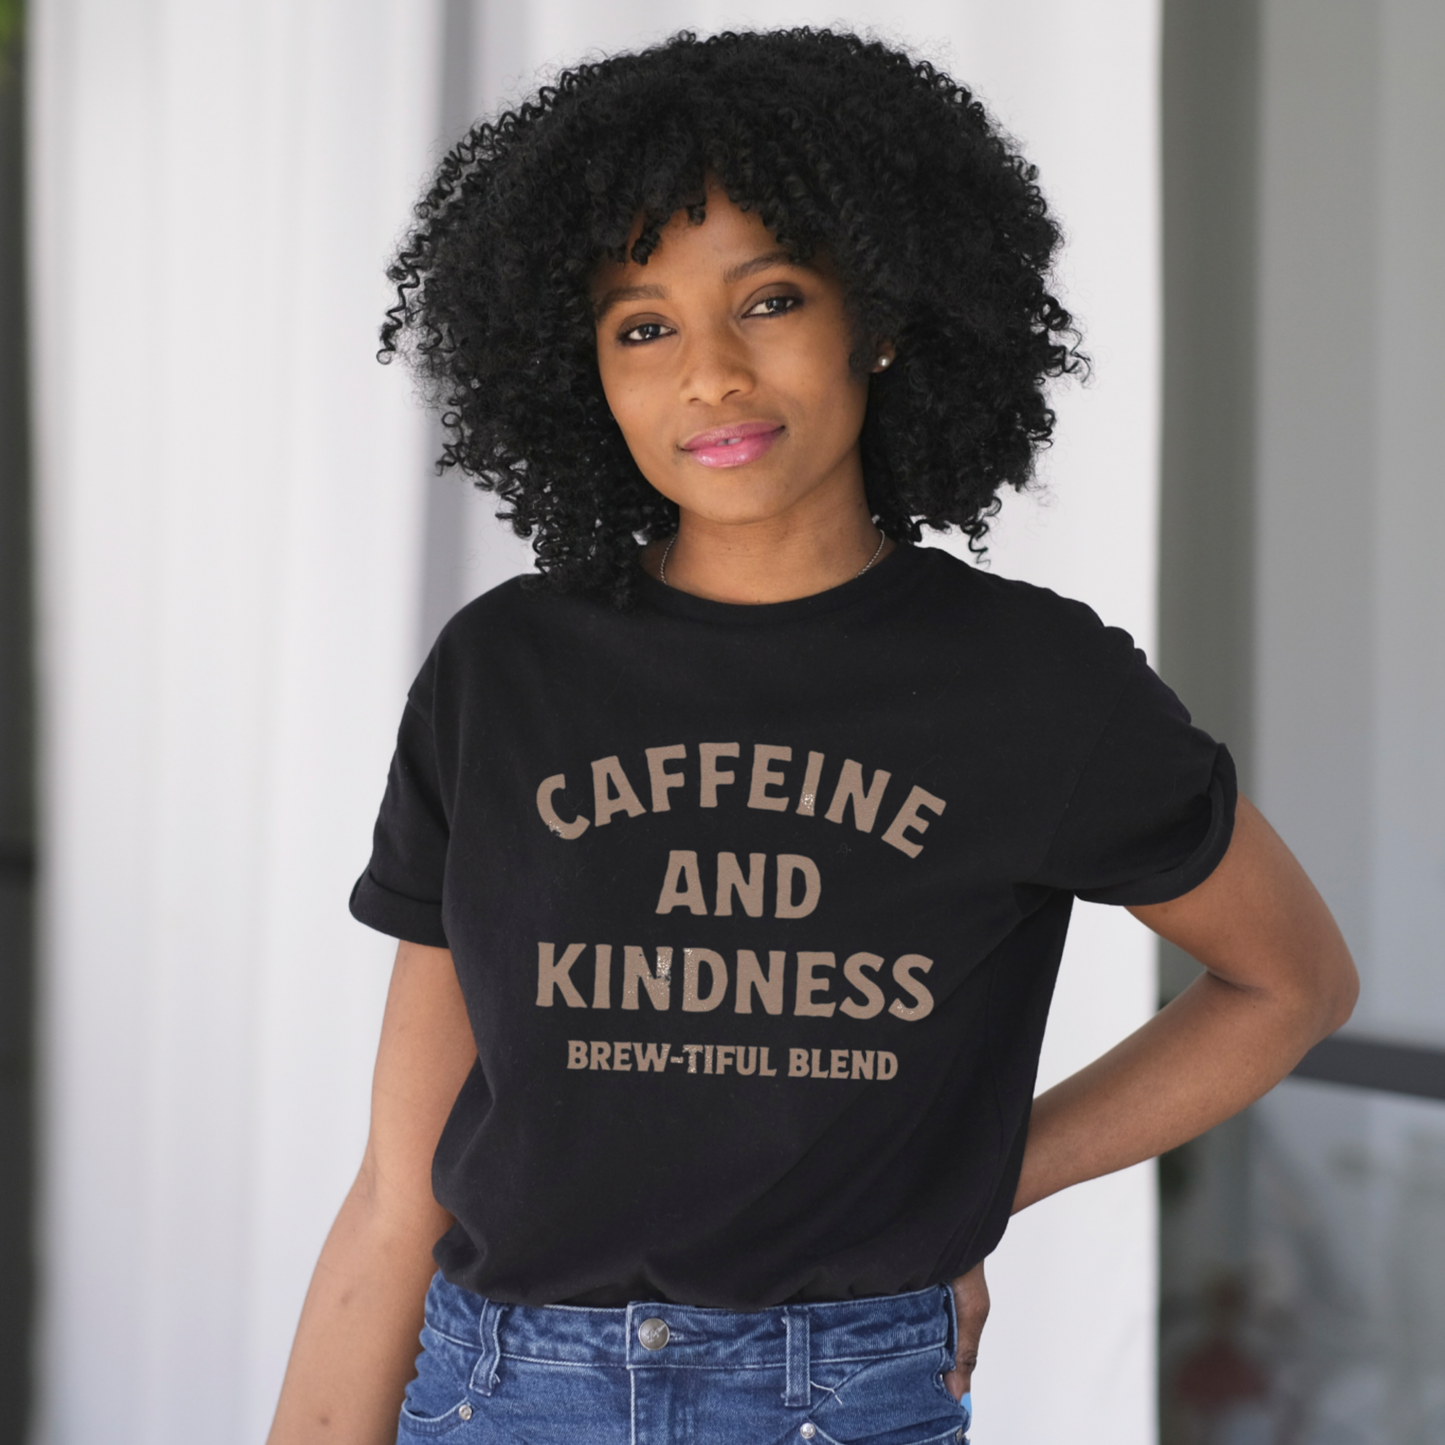 Caffeine + Kindness tee